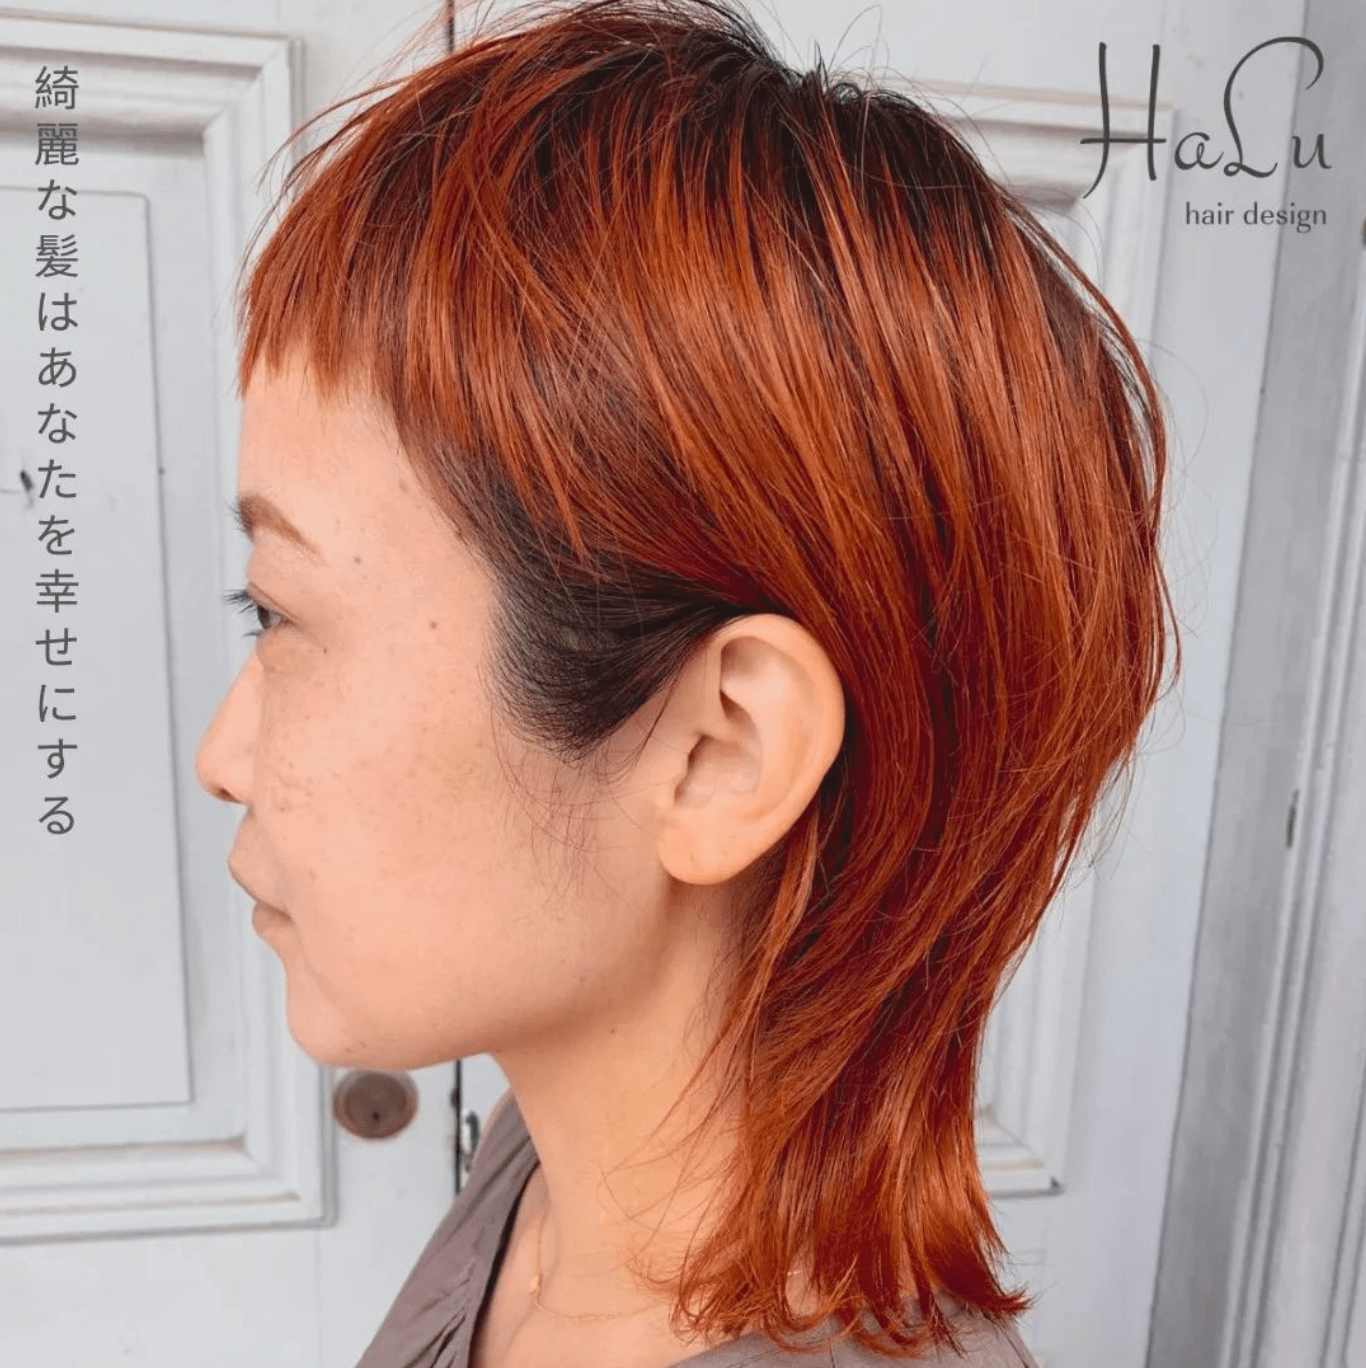 affordable hair salons singapore - HaLu Hair Design - cut